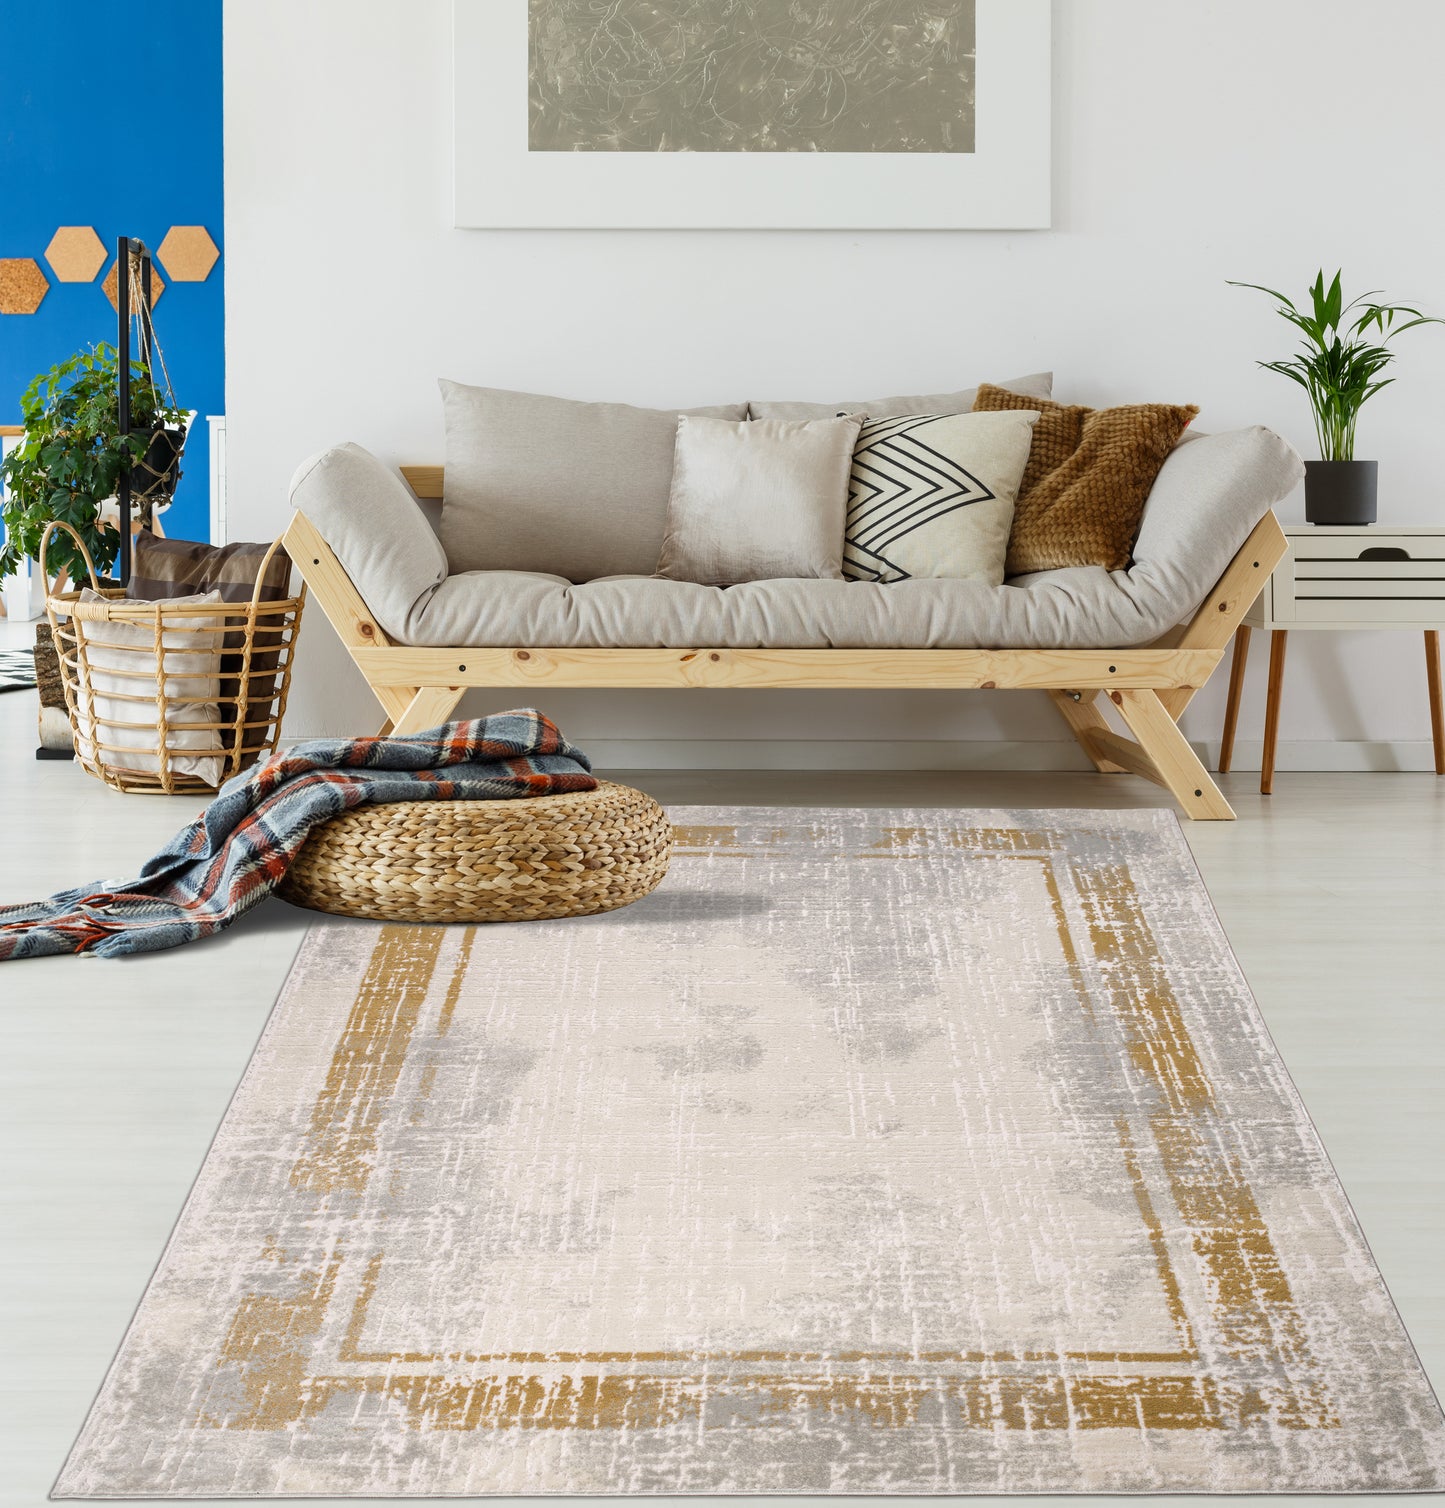 Mustard Grey Bordered Modern Contemporary Minimalistic Area Rug For Living Room Bedroom